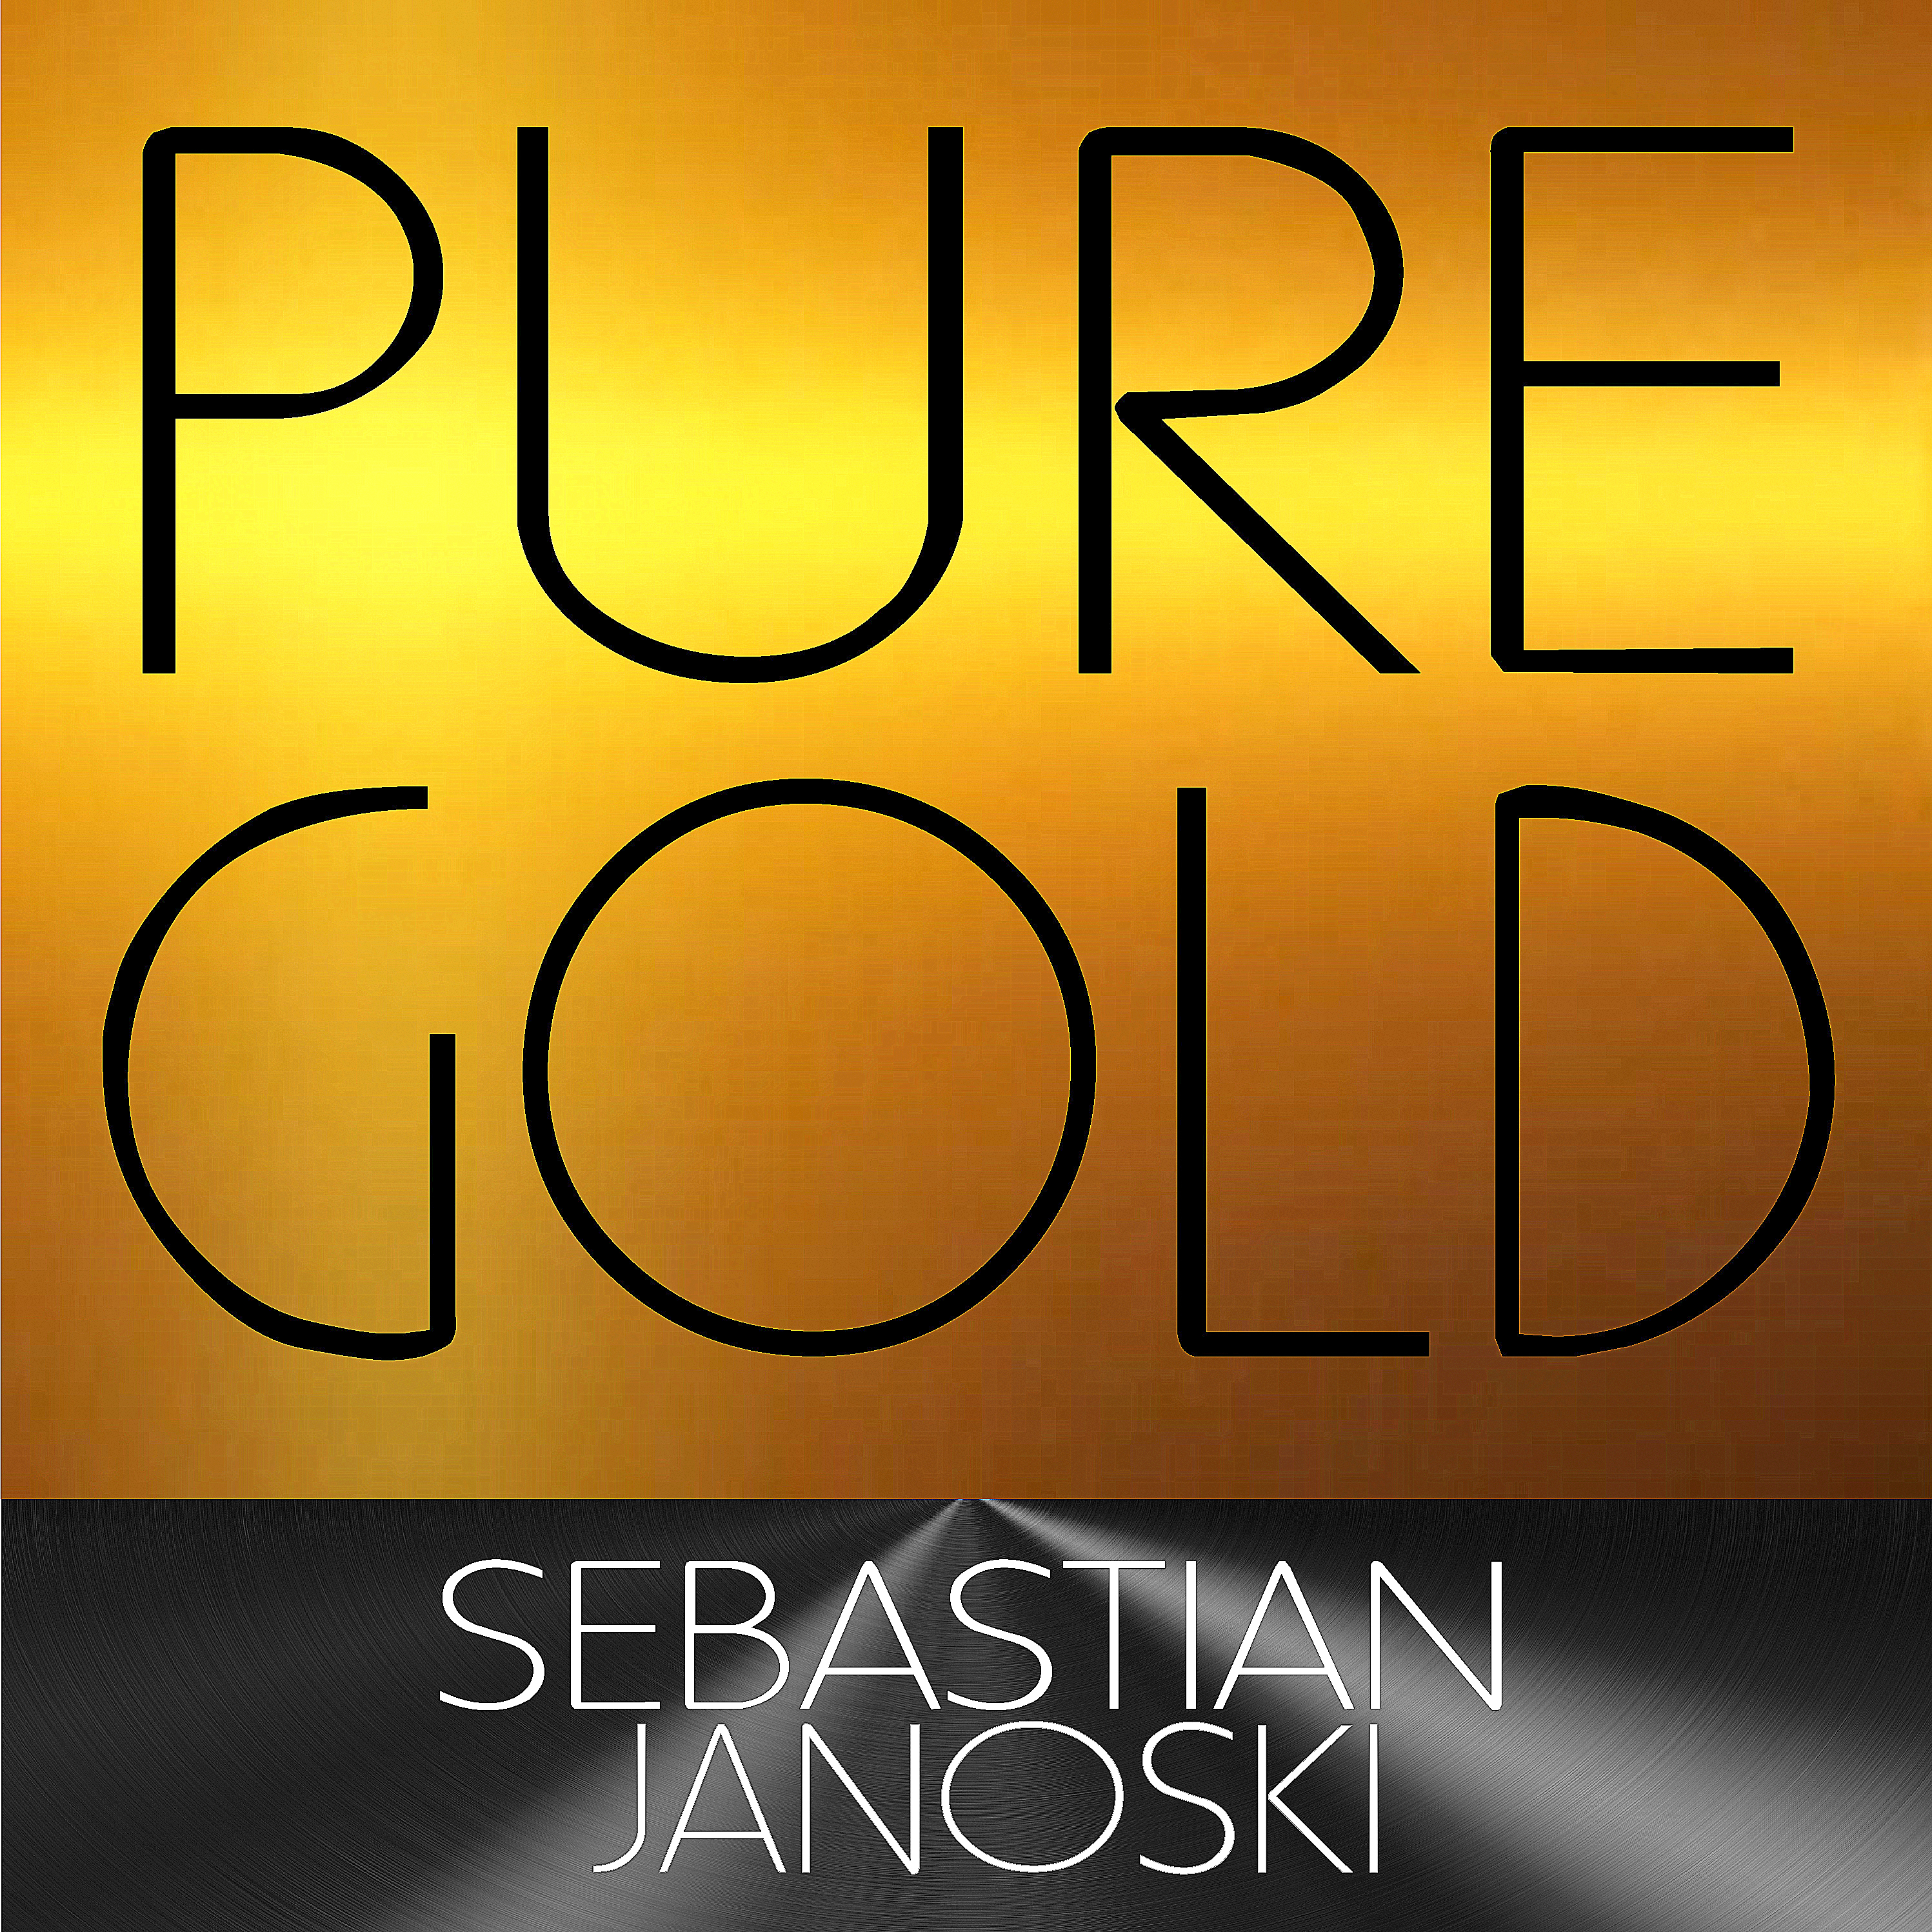 Recording Artist Sebastian Janoski's Single “'